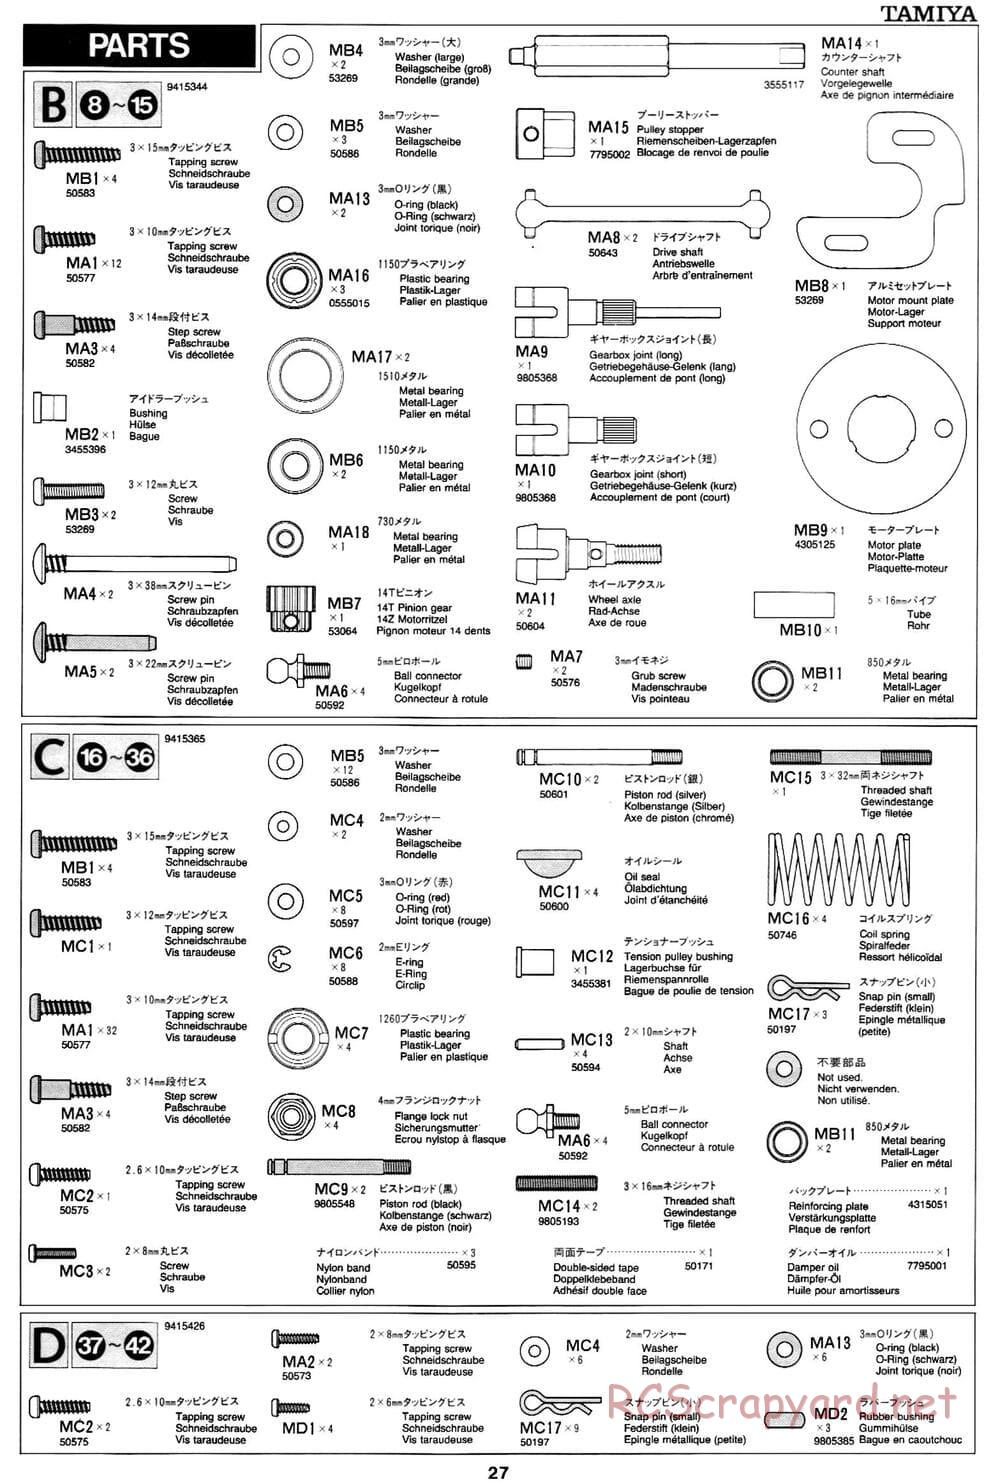 Tamiya - Mercedes CLK-GTR - TA-03R Chassis - Manual - Page 27